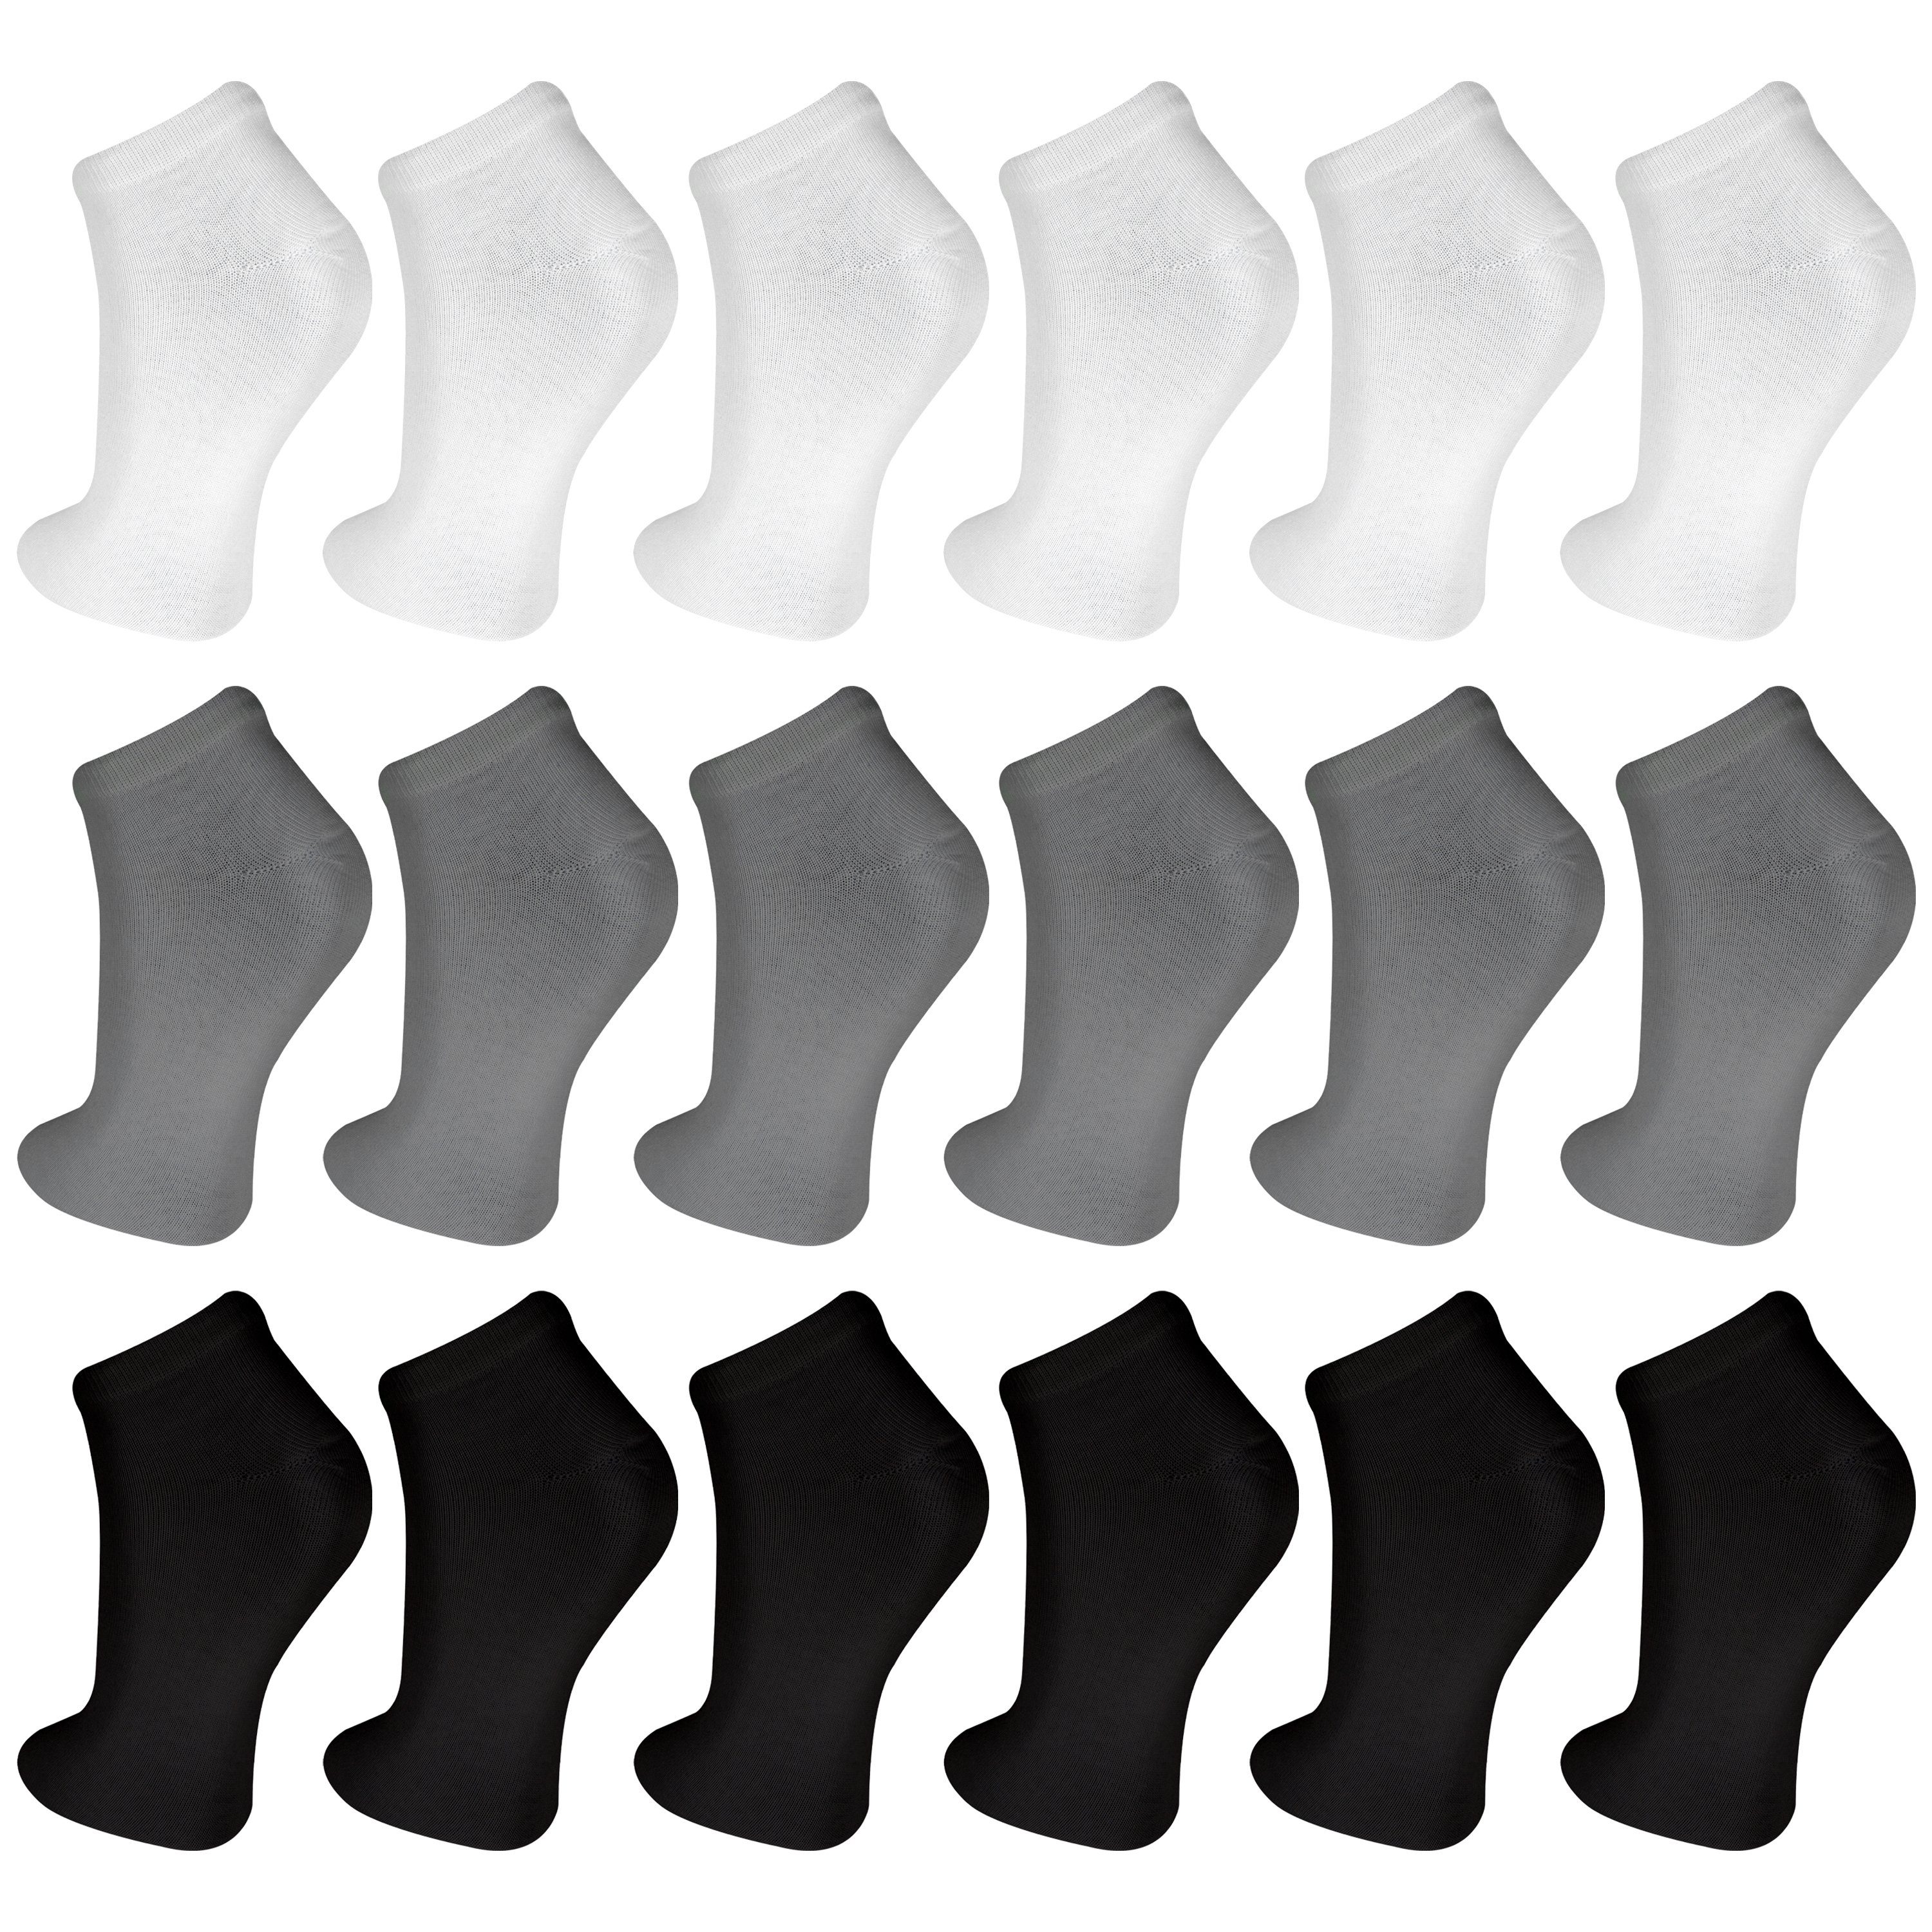 TEXEMP Sneakersocken 12, 24, 36 Paar Sneaker Socken Herren Damen Baumwolle Schwarz Weiß Grau Sport Füßlinge Kurzsocken Quarter (Packung, 12-Paar) Robust & Langlebig Schwarz-Weiß-Grau